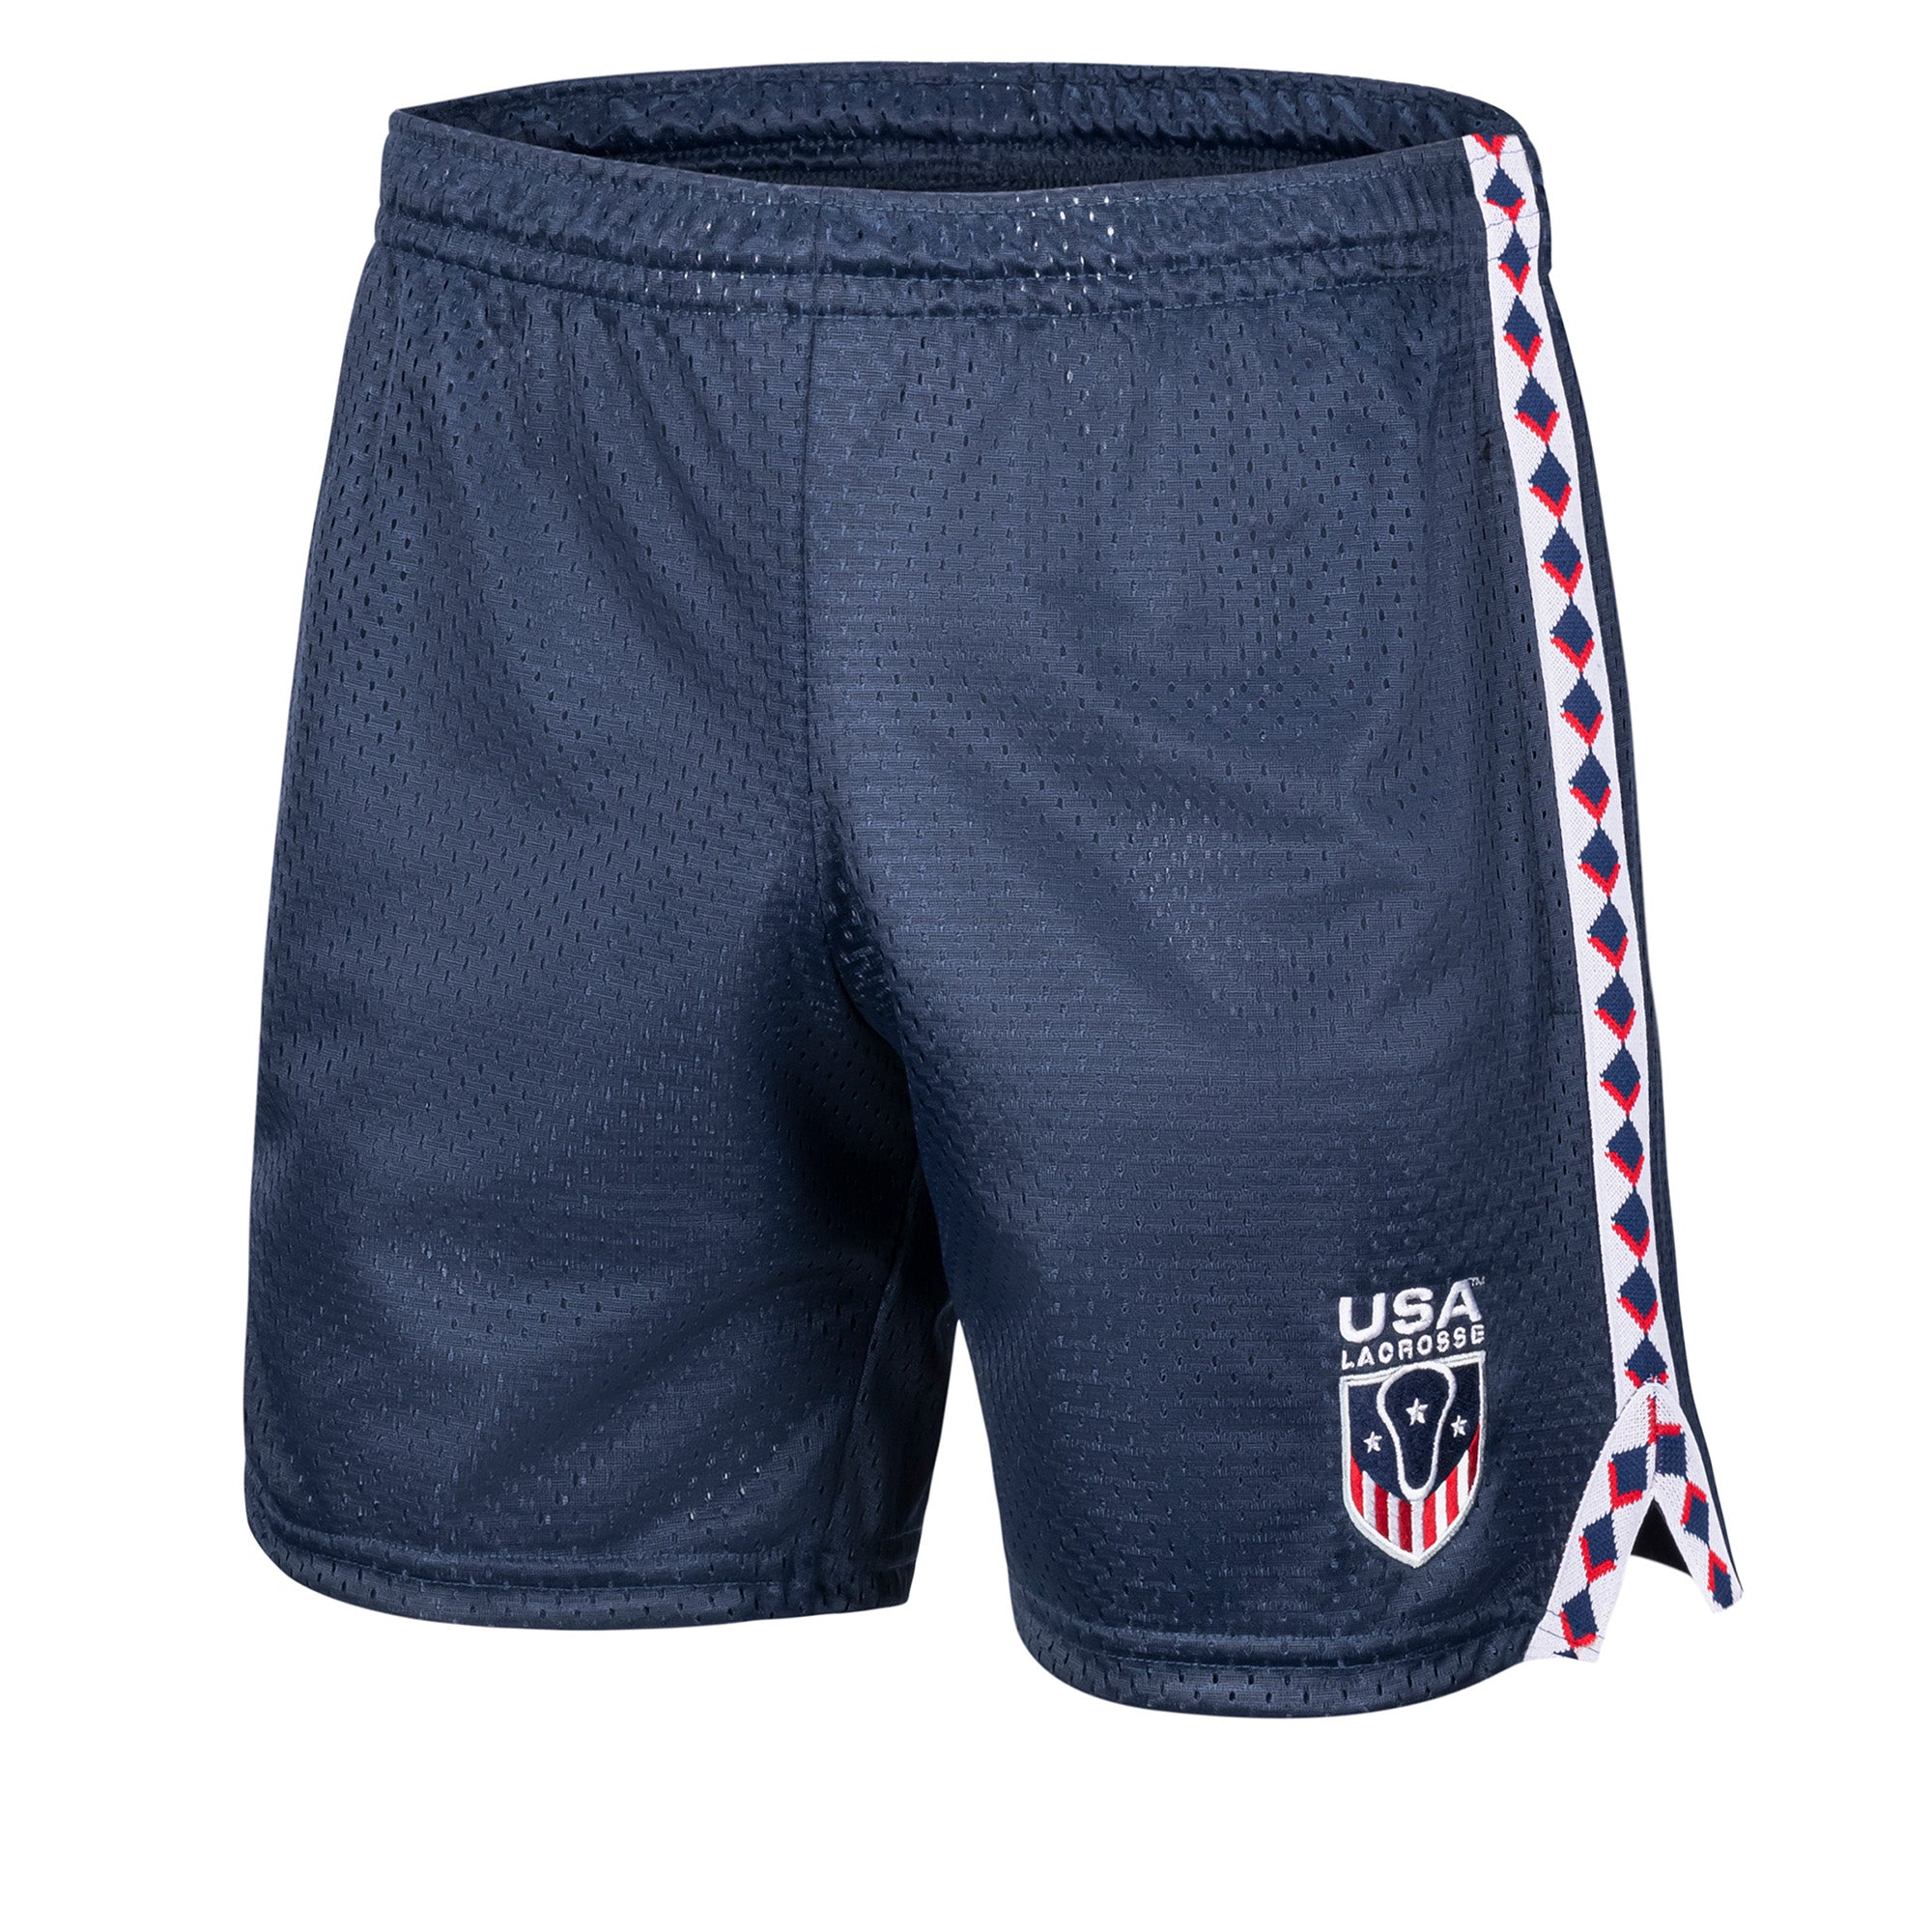 USA Lacrosse Retro Player Shorts